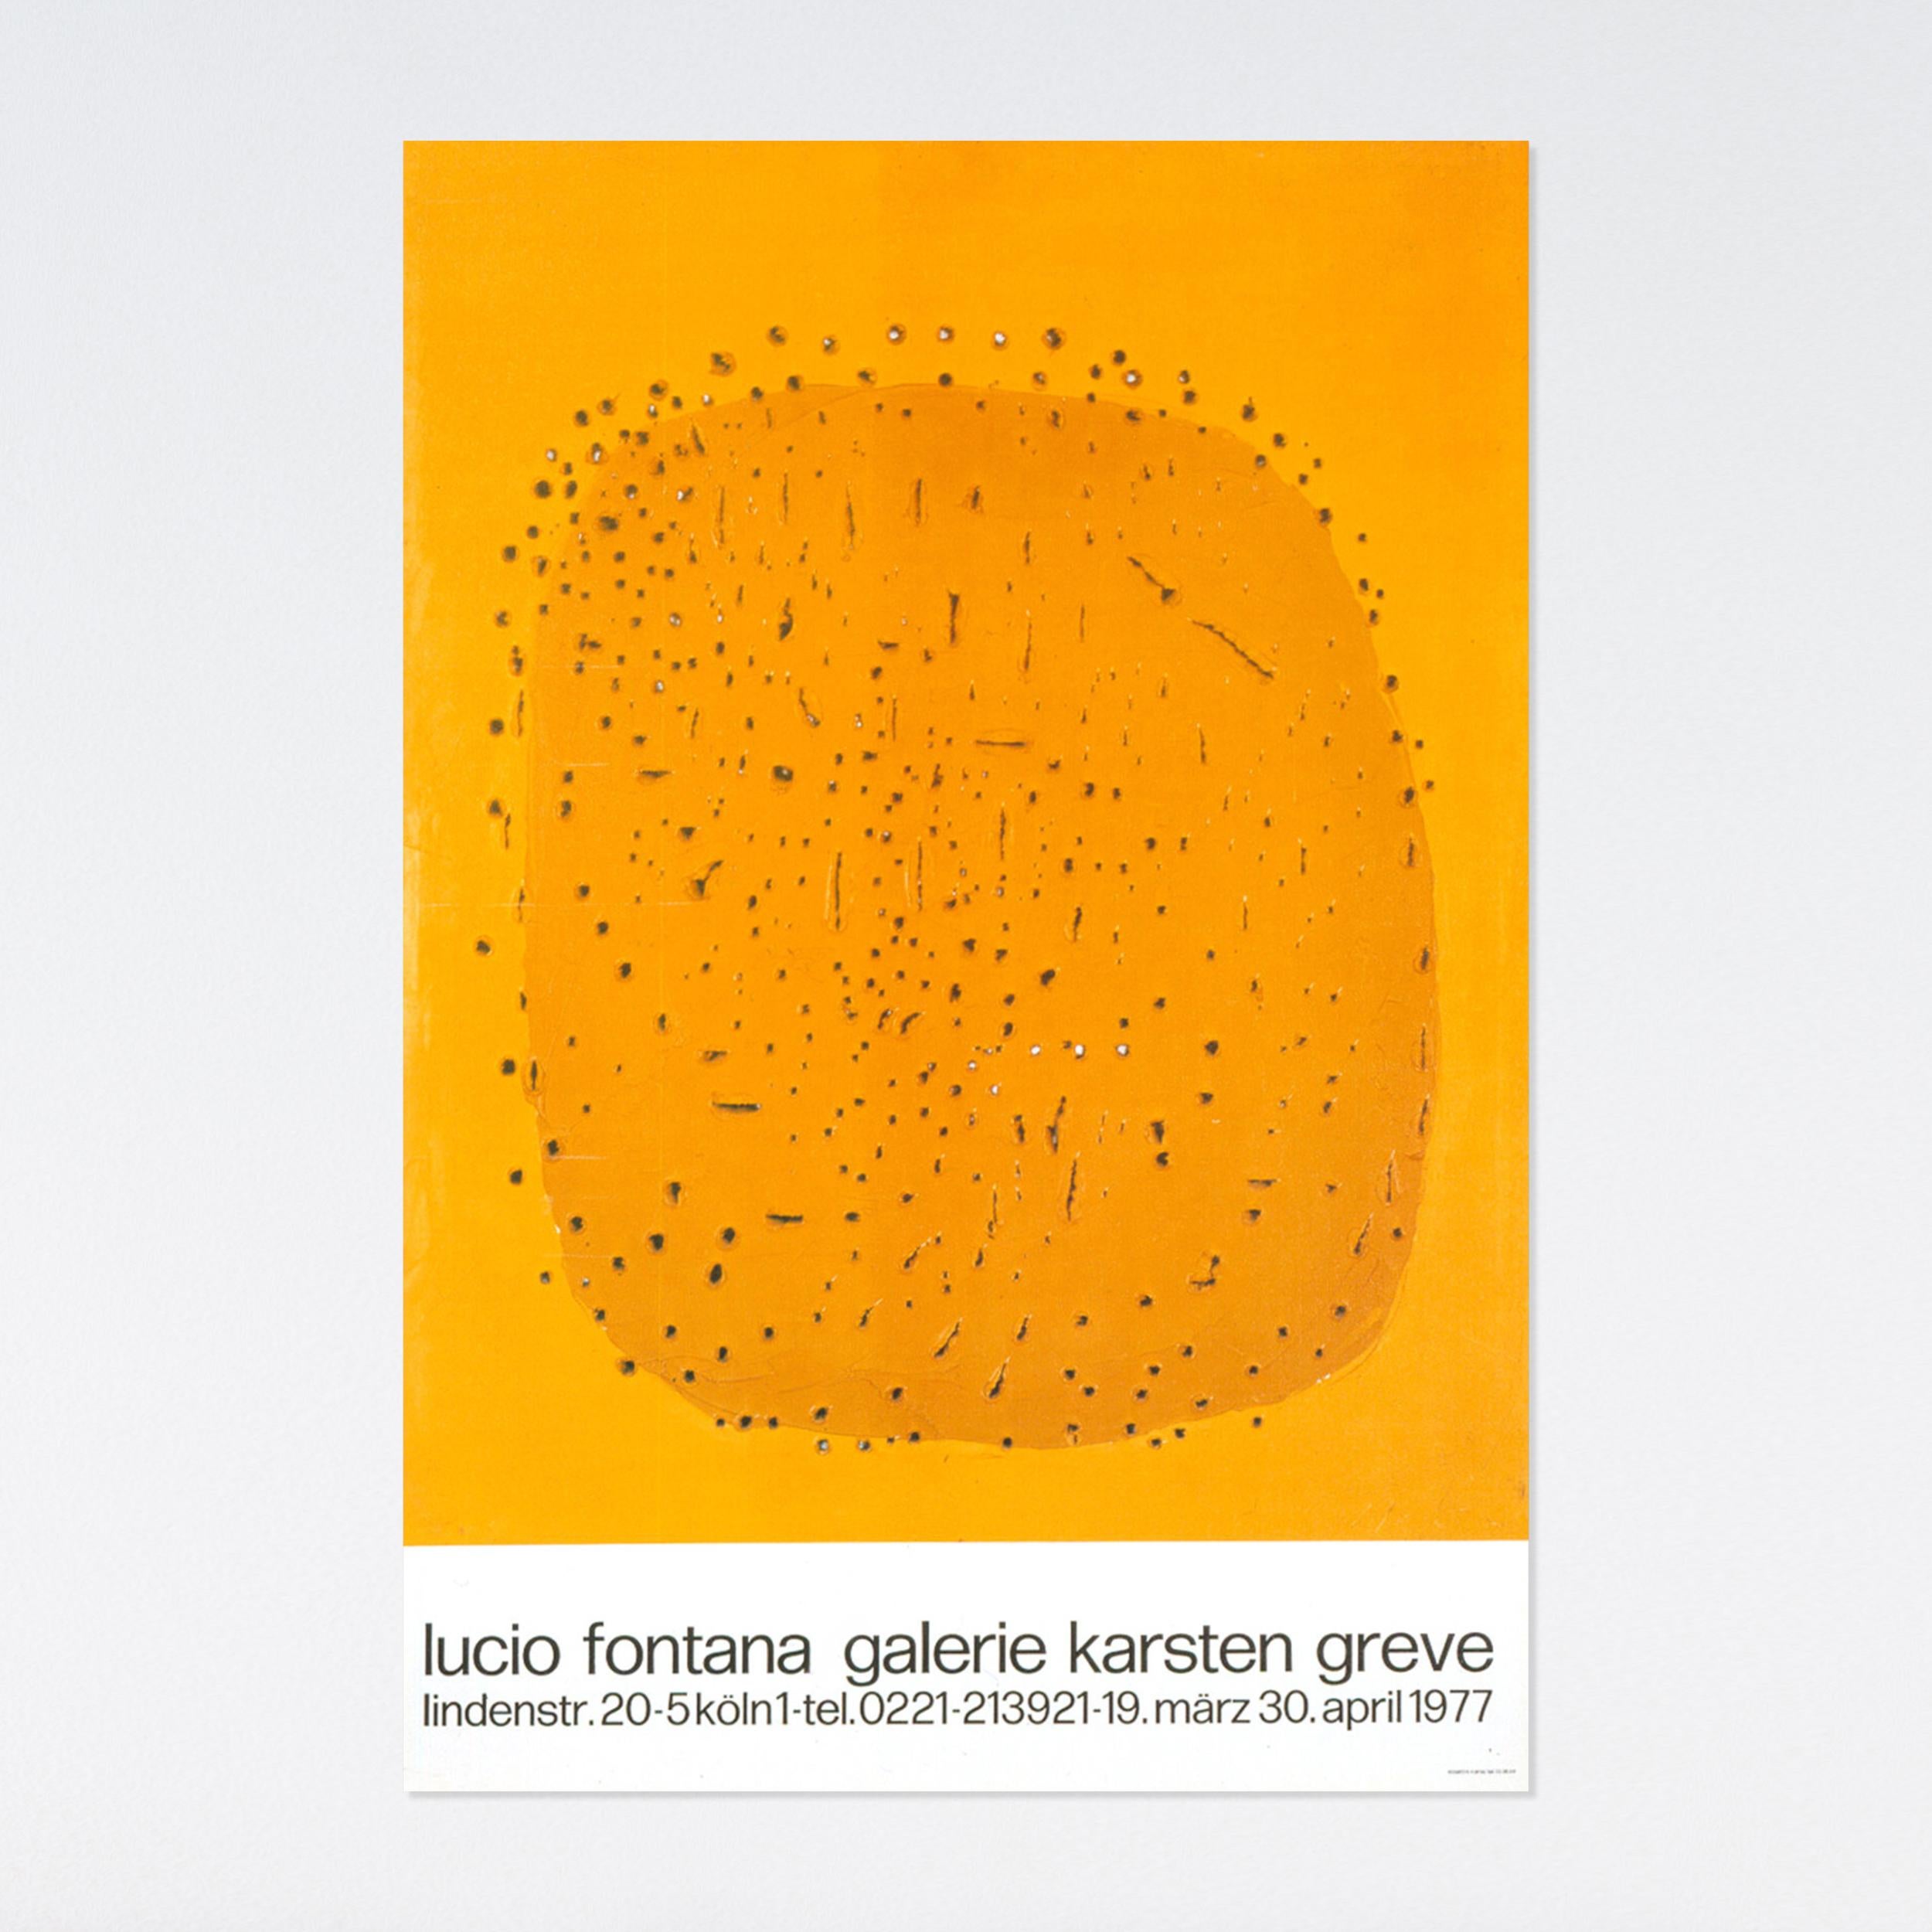 Lucio Fontana, 1977 Large Galerie Karsten Greve Museum Poster, Orange